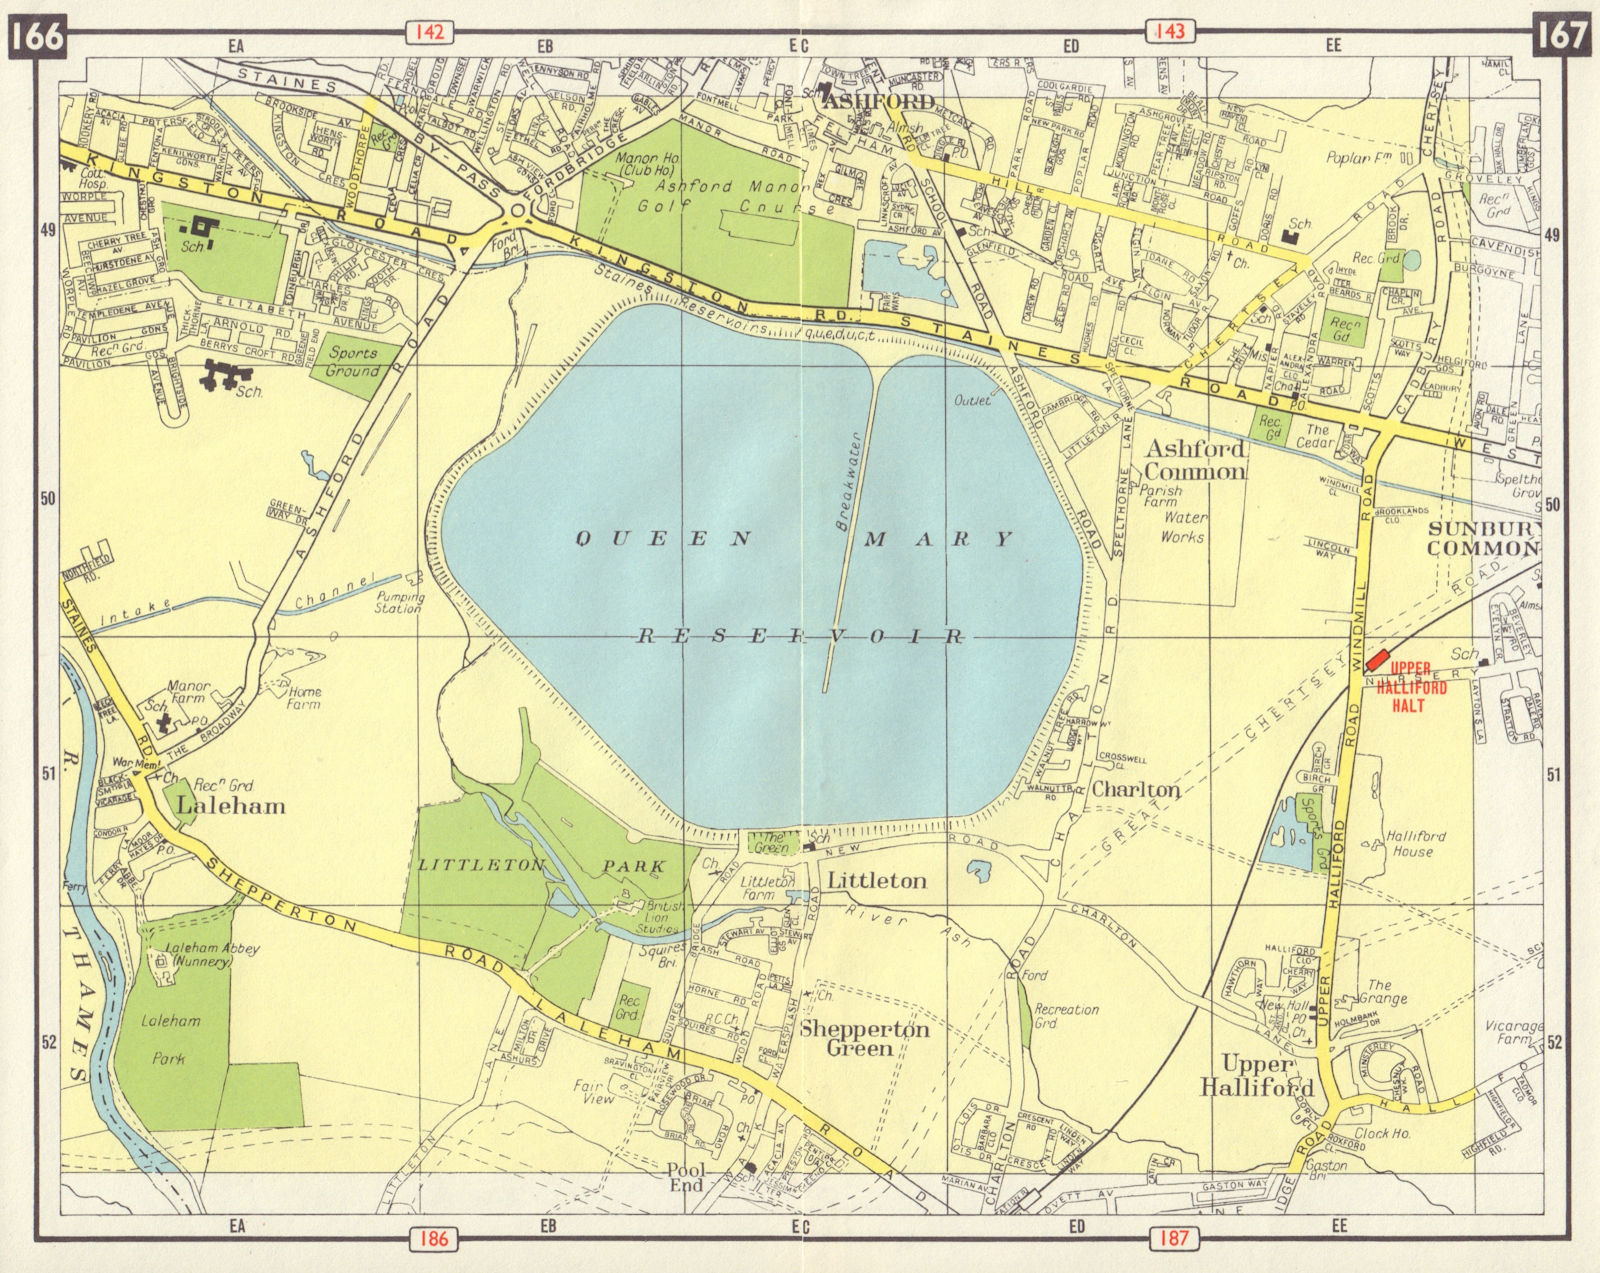 SW LONDON Ashford Laleham Shepperton Littleton Halliford M3 projected 1965 map